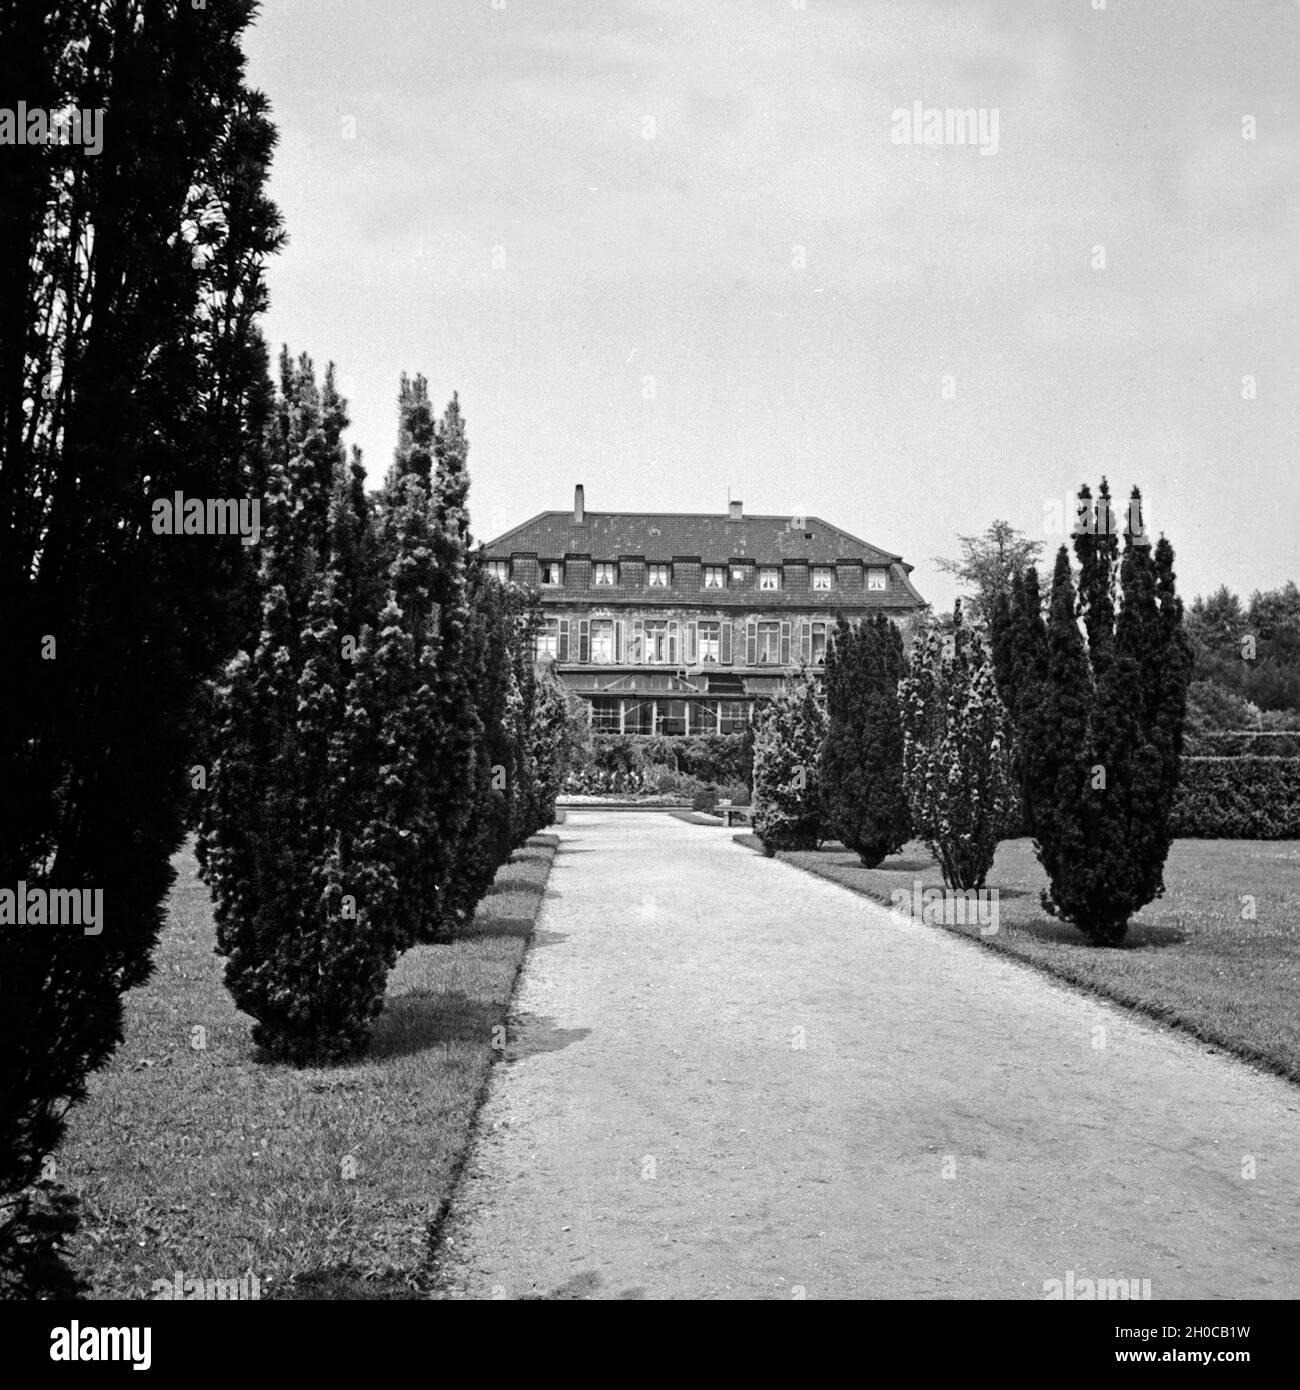 Schloss Berge, auch Haus Berge, in Gelsenkirchen Buer, Deutschland 1930er Jahre. Berge castle at Gelsenkirchen Buer, Germany 1930s- Stock Photo